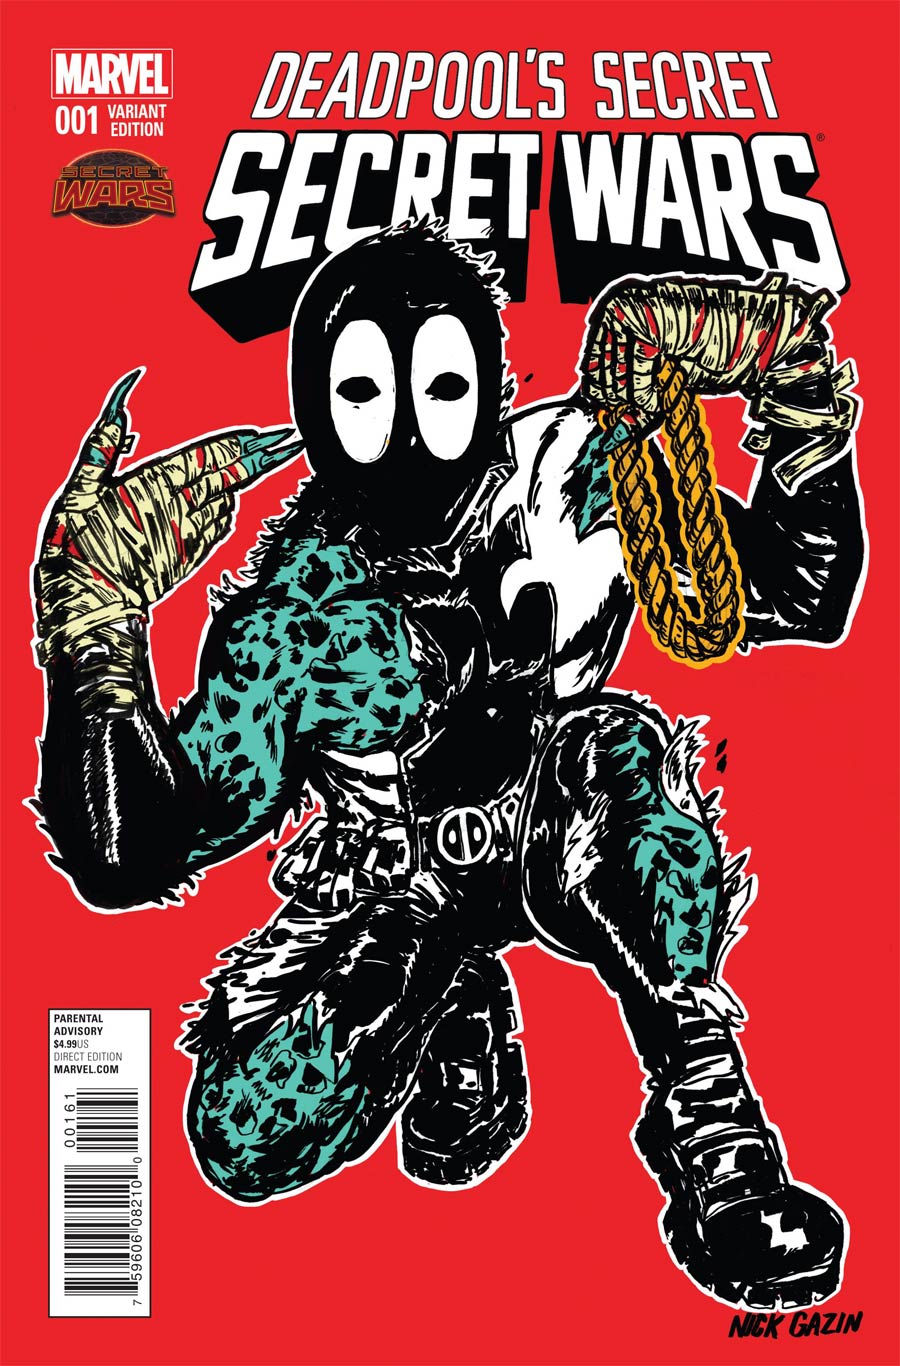 Deadpools Secret Secret Wars #1 Cover E Variant Nick Ganzin Album Artist Cover (Secret Wars Warzones Tie-In)